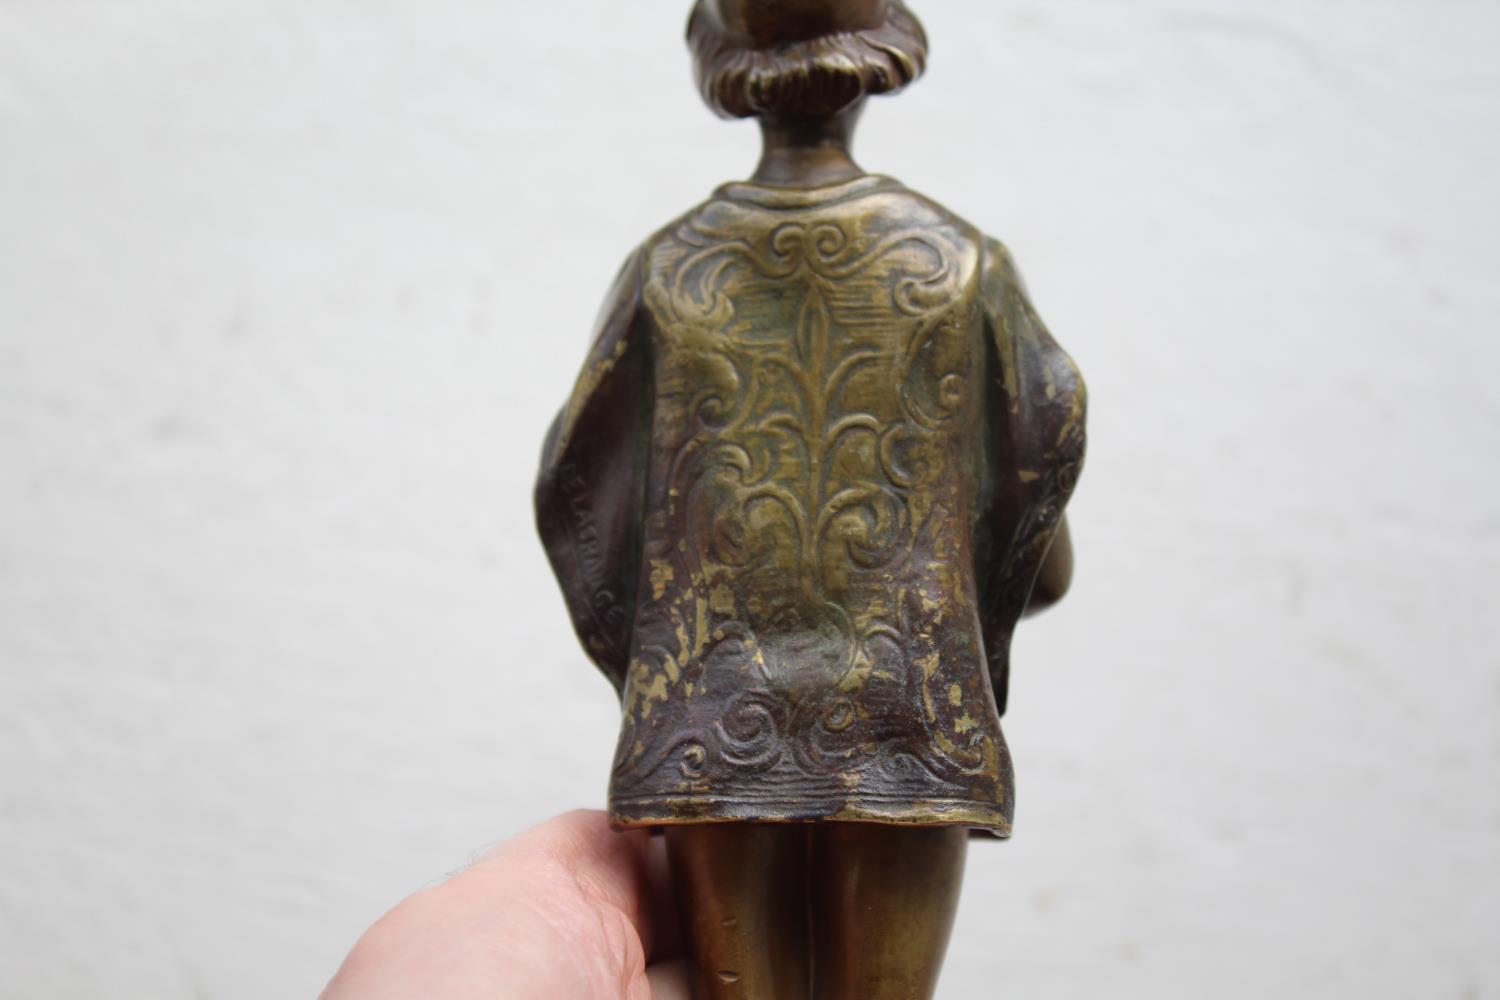 FRIEDRICH GOLDSCHEIDER BRONZE a small bronze figure of a boy in a Court uniform, and holding a - Image 9 of 12